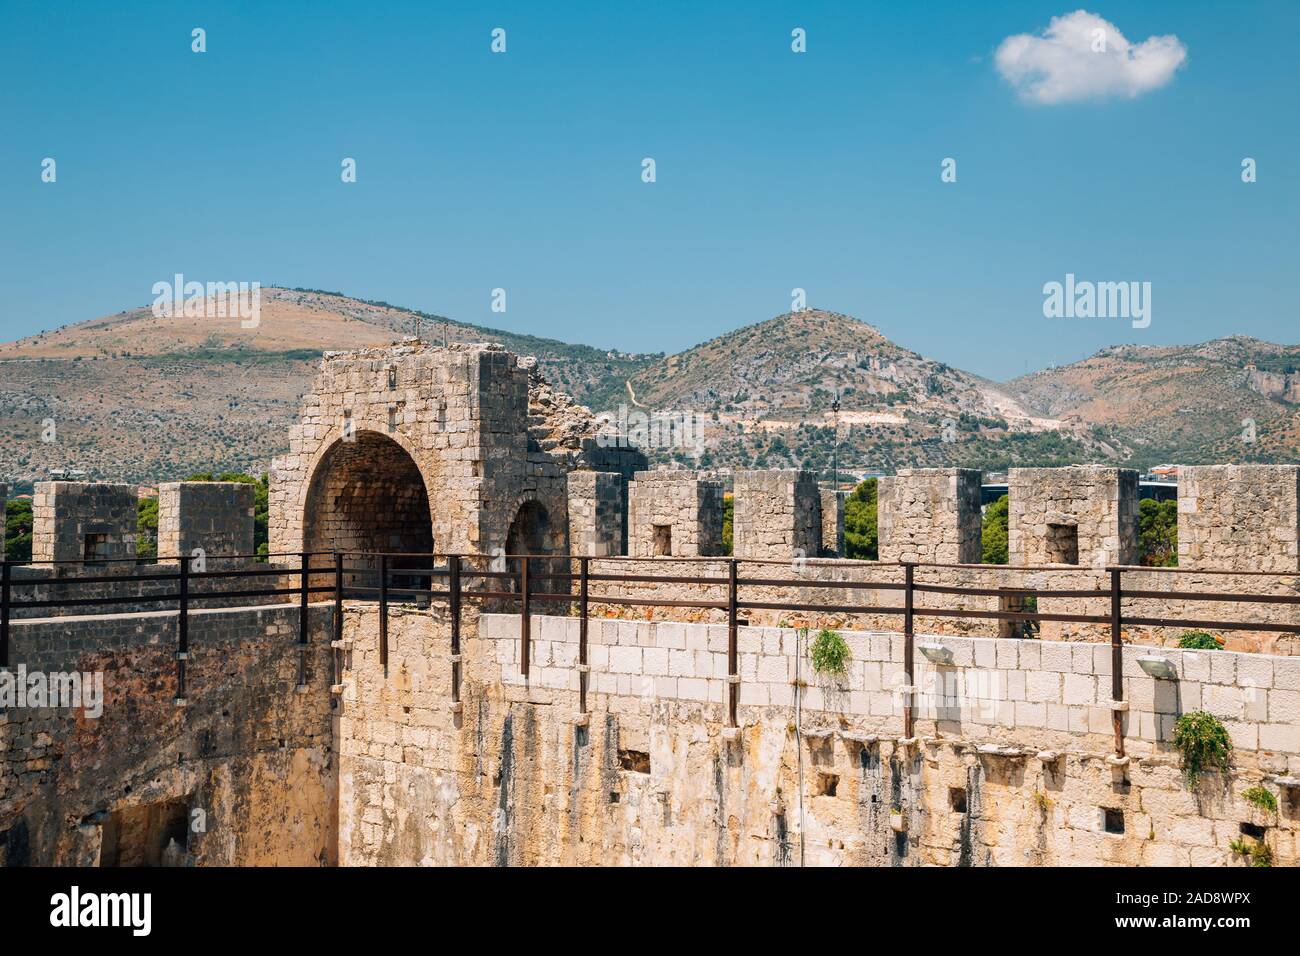 Kamerlengo castle and fortress in Trogir, Croatia Stock Photo